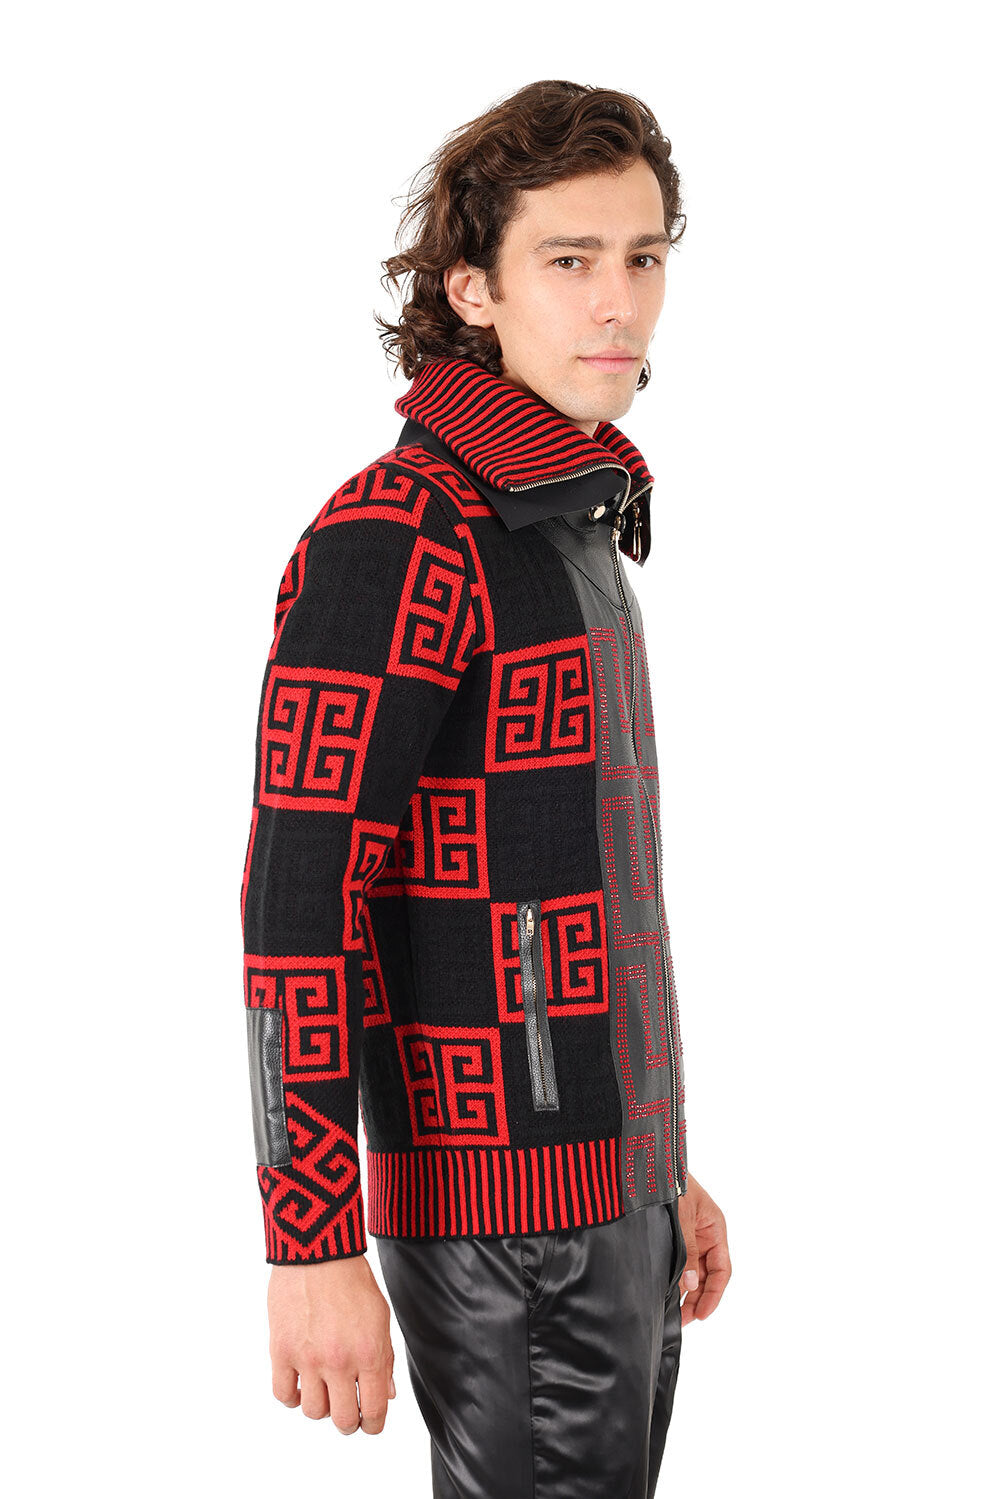 Barabas Men's Greek Key Print Rhinestone Leather Winter Sweater 2SWZ2 Red Black